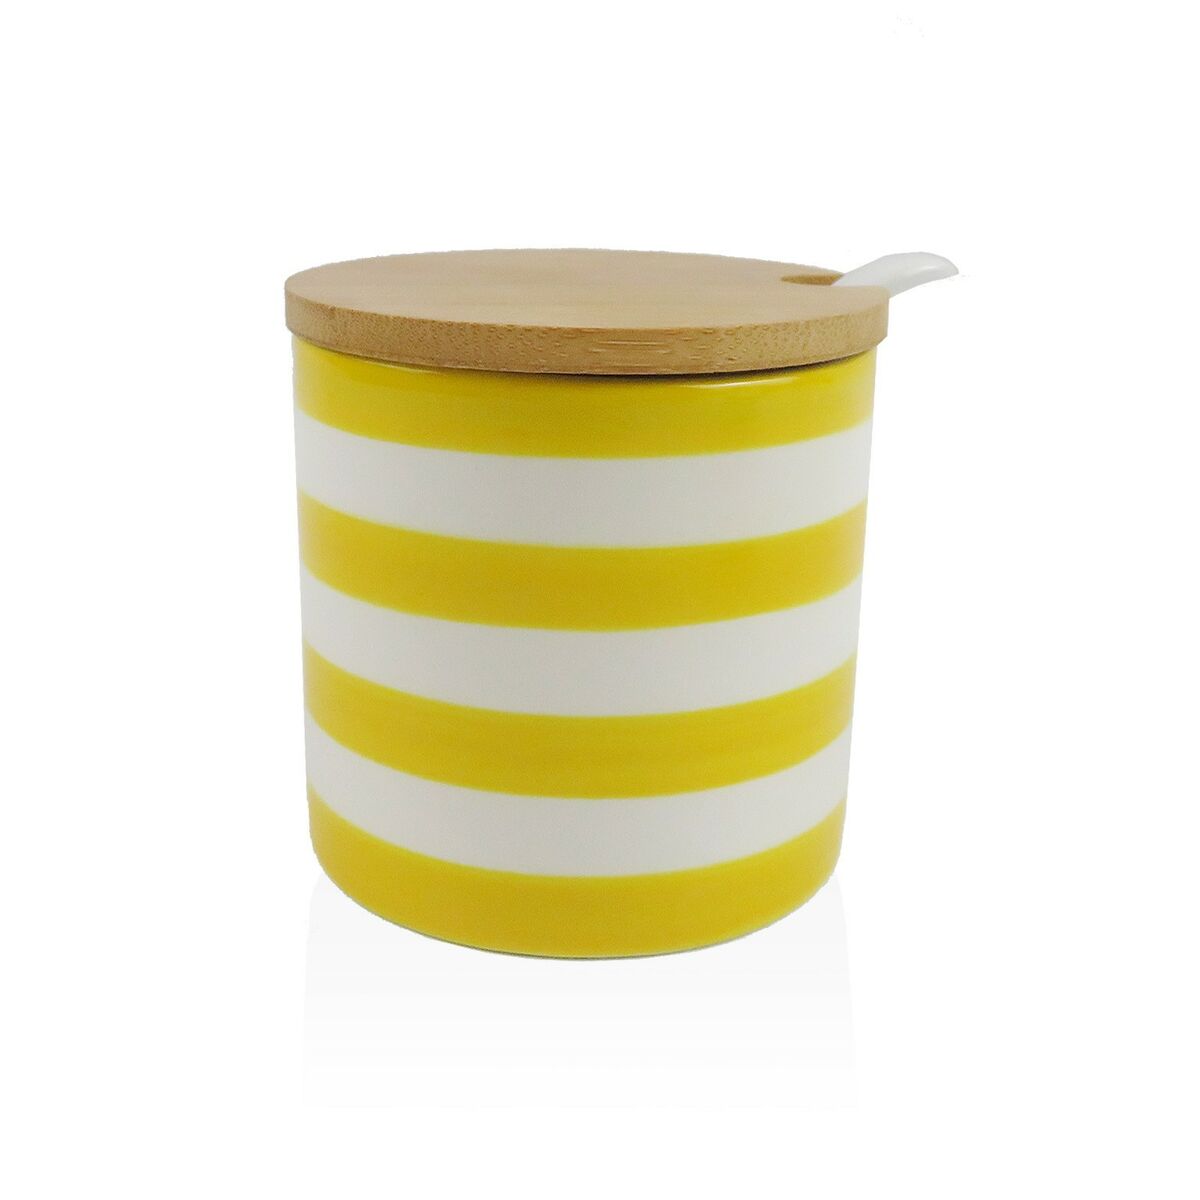 Sugar Bowl Versa Yellow Ceramic Dolomite 8 x 8 x 8 cm Stripes Circular